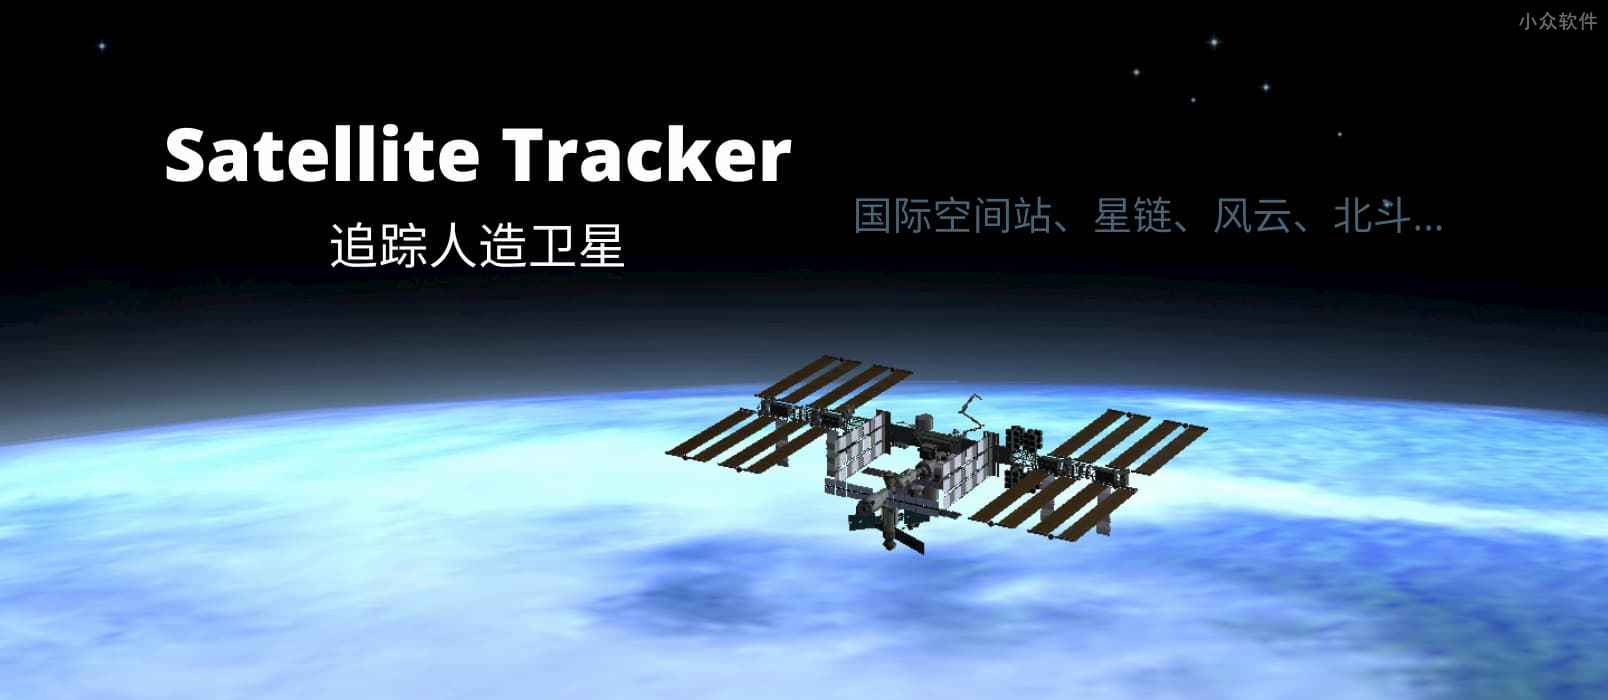 Satellite Tracker - 人造卫星观测指南，实时追踪国际空间站、星链（Starlink）、风云系列卫星、北斗卫星 1